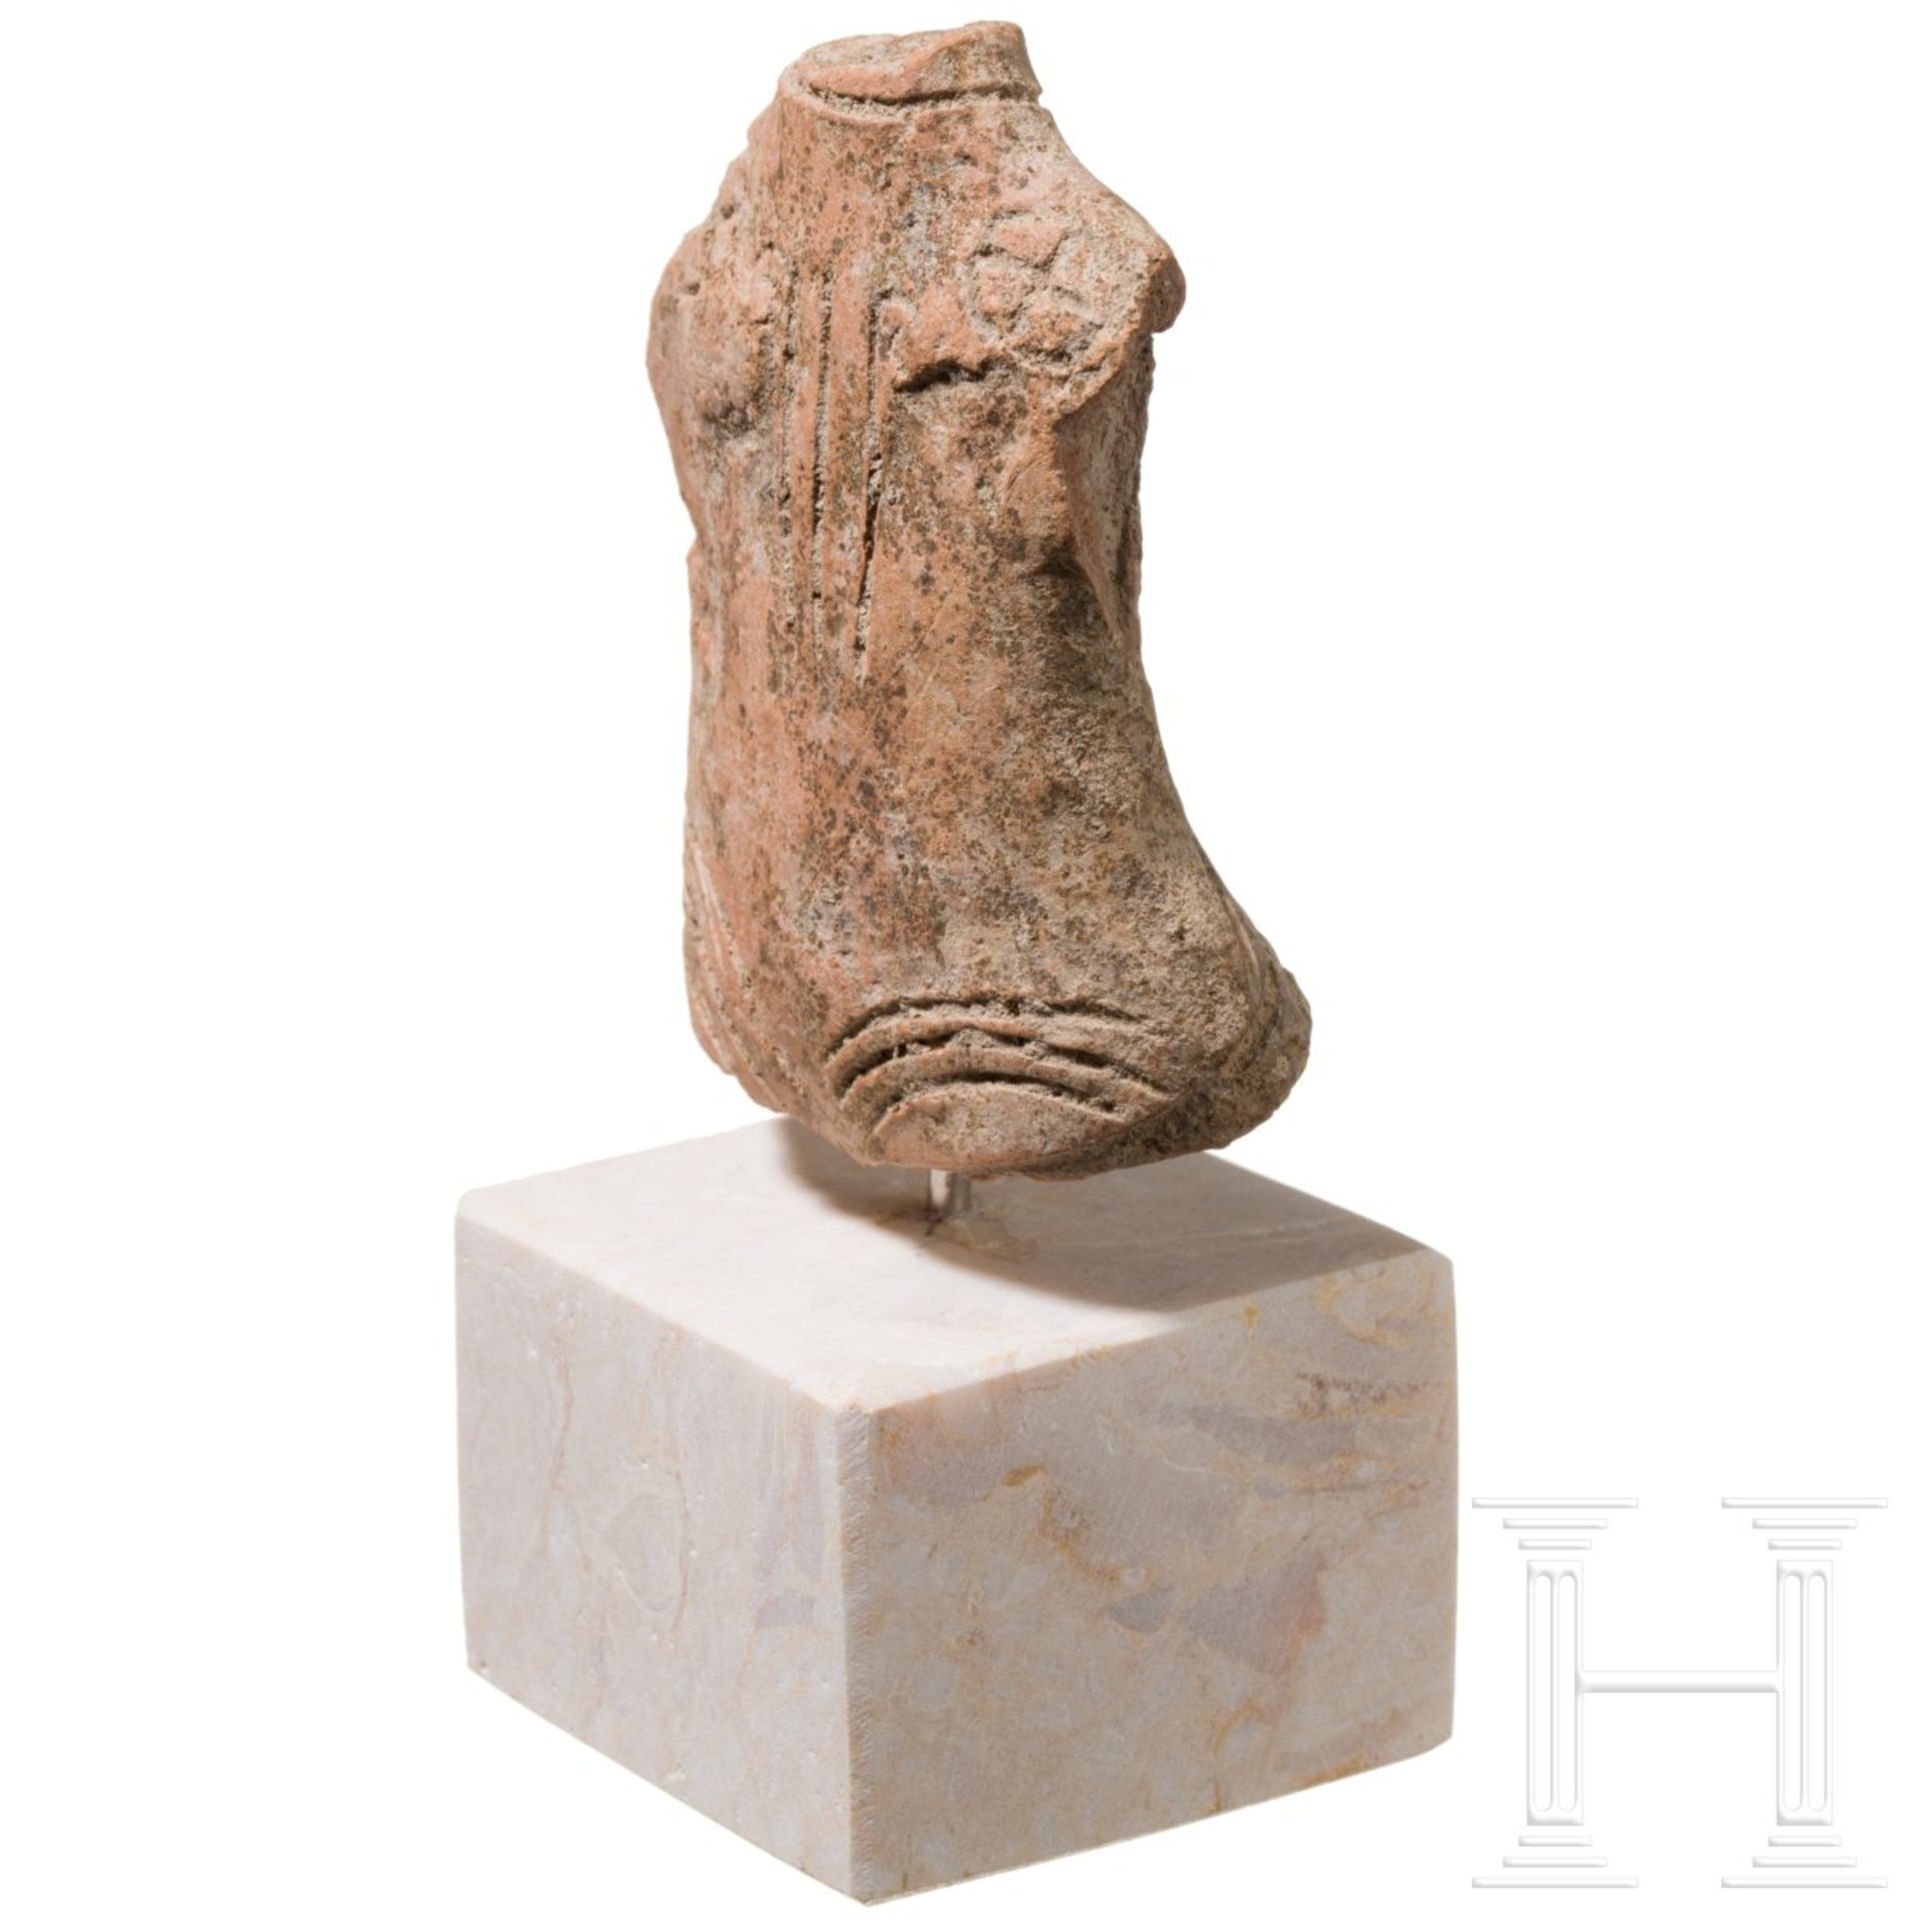 Terrakotta-Idol, Vinca-Kultur, Südosteuropa, 4. Jtsd. v. Chr. - Bild 3 aus 5